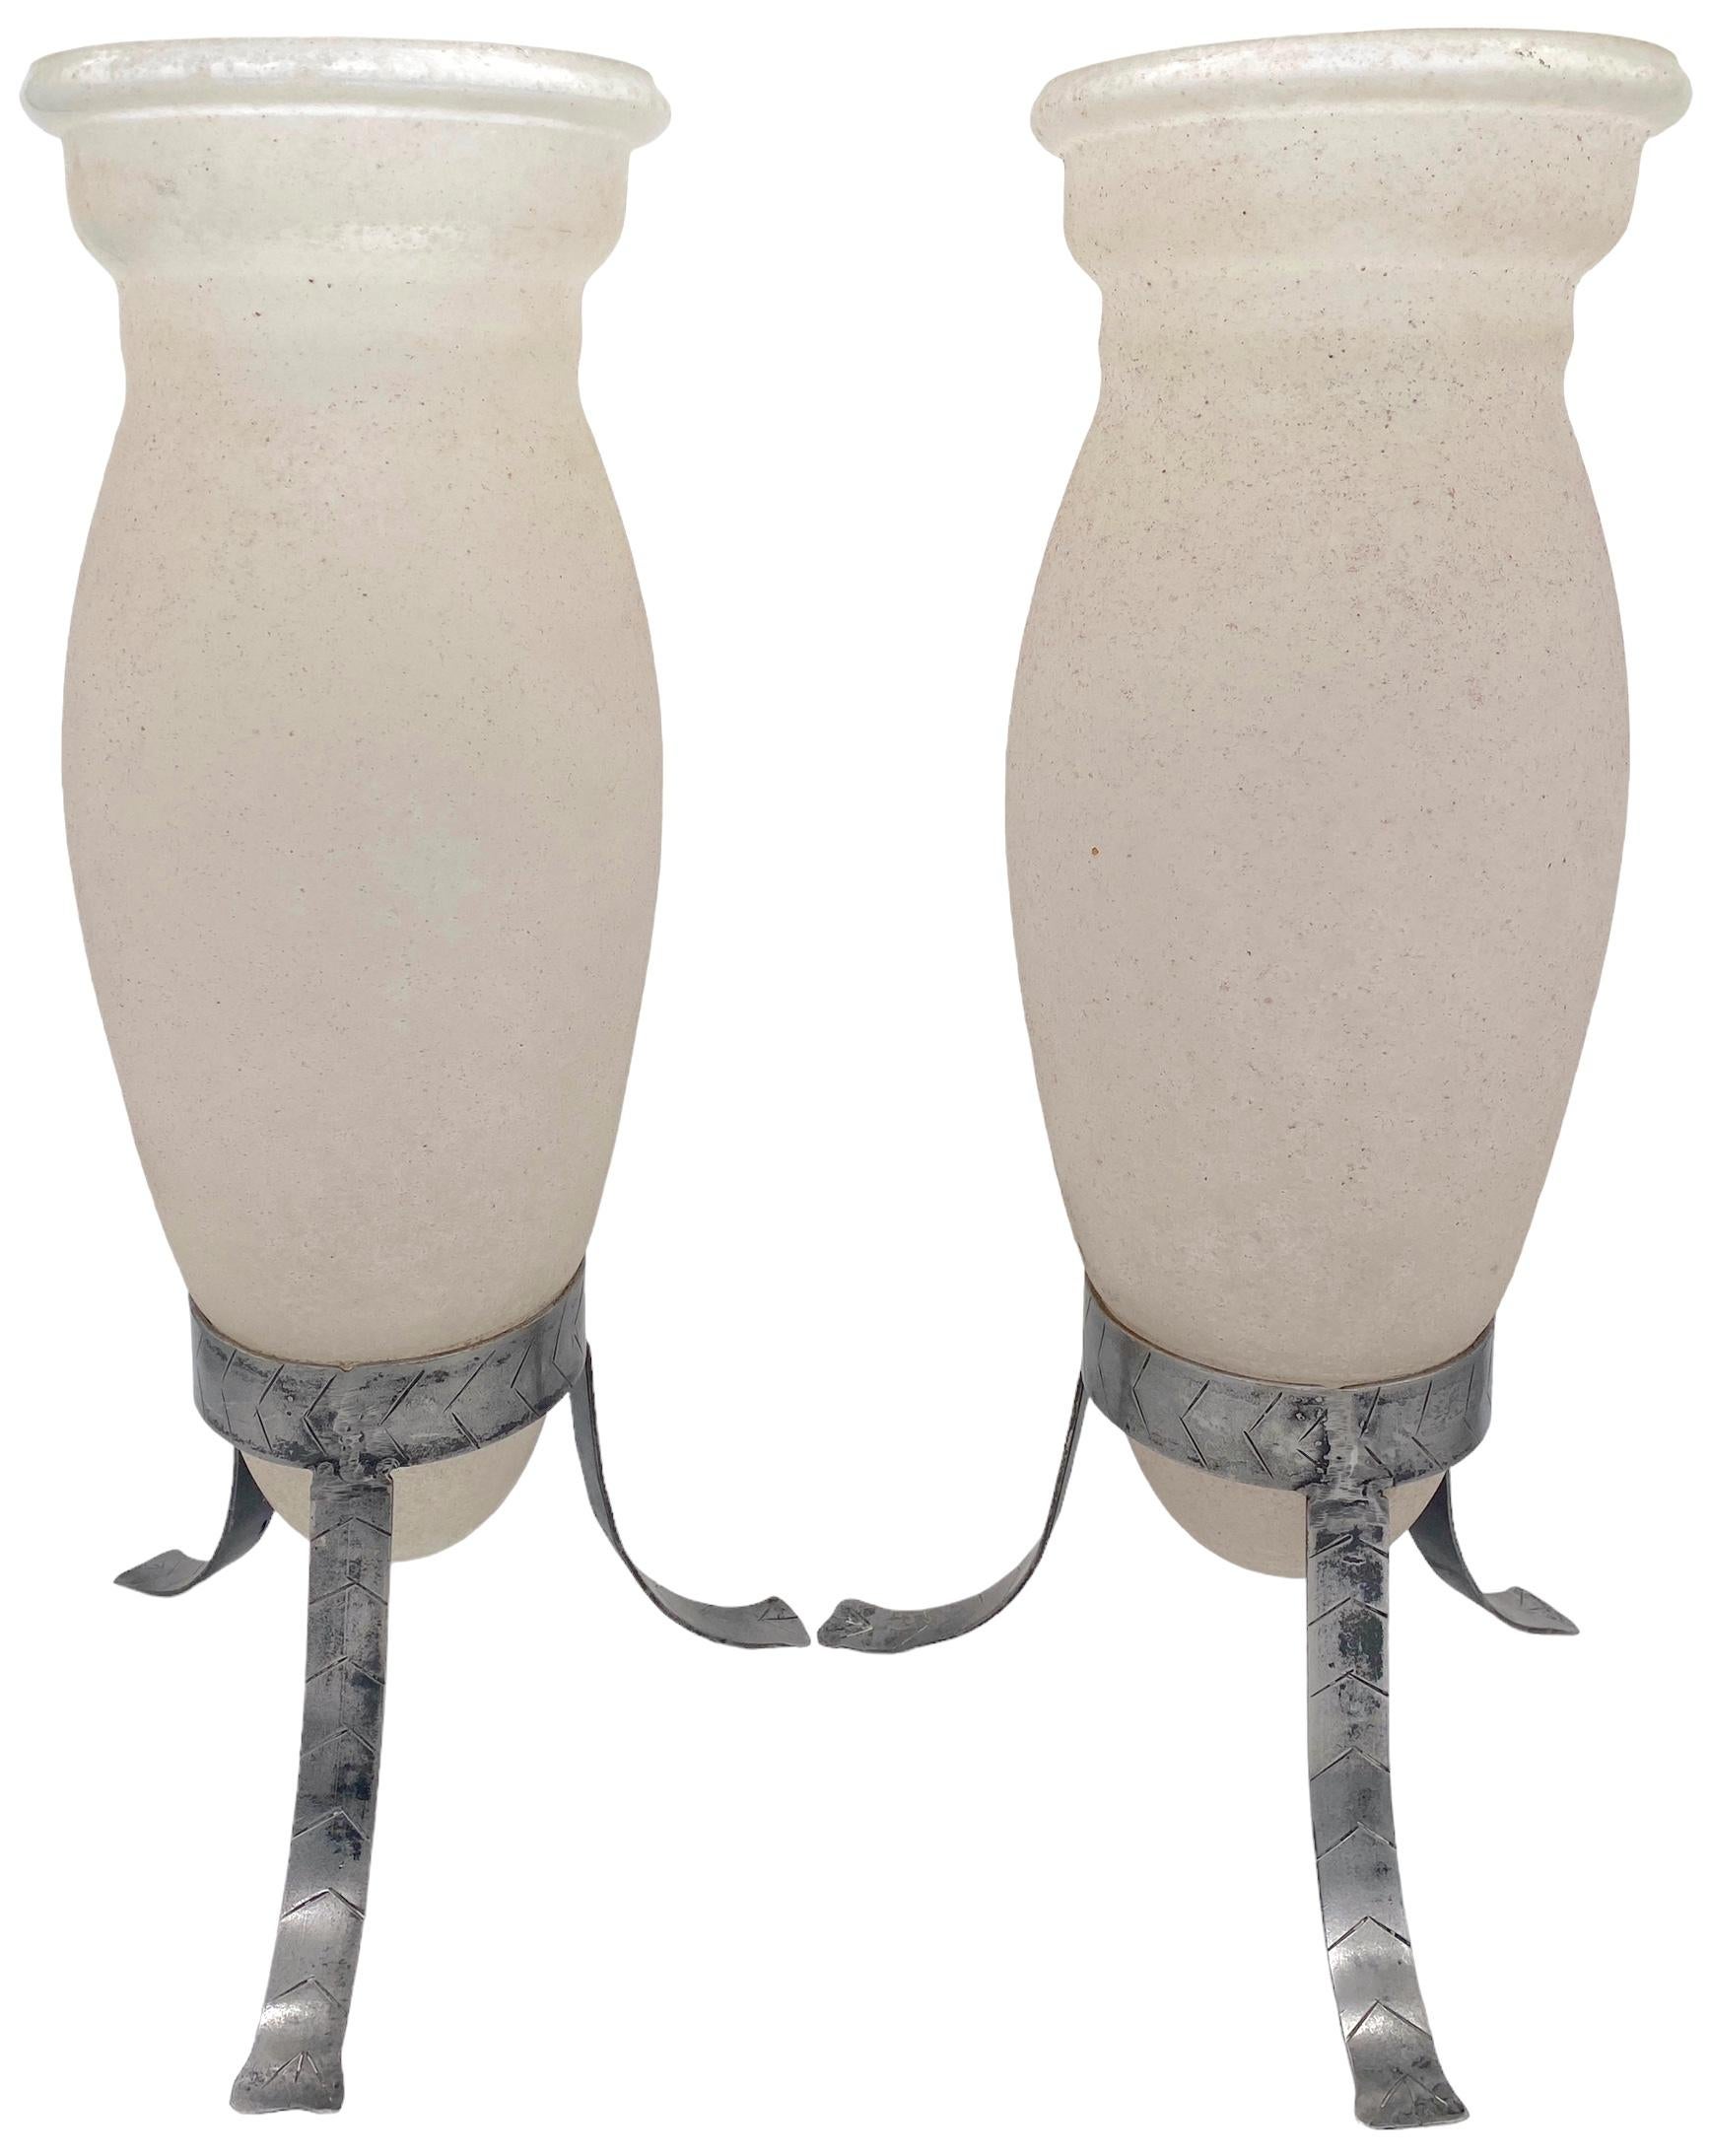 Large Pair of Murano 'Scavo' & Iron Trumpet Vases Attributed Seguso Vetri d'Arte
Murano, Italy, Circa 1980s

A exquisite large pair of Murano 'Scavo' & Iron Trumpet Vases, attributed to the renowned  workshops of Seguso Vetri d'Arte. Hand Made in